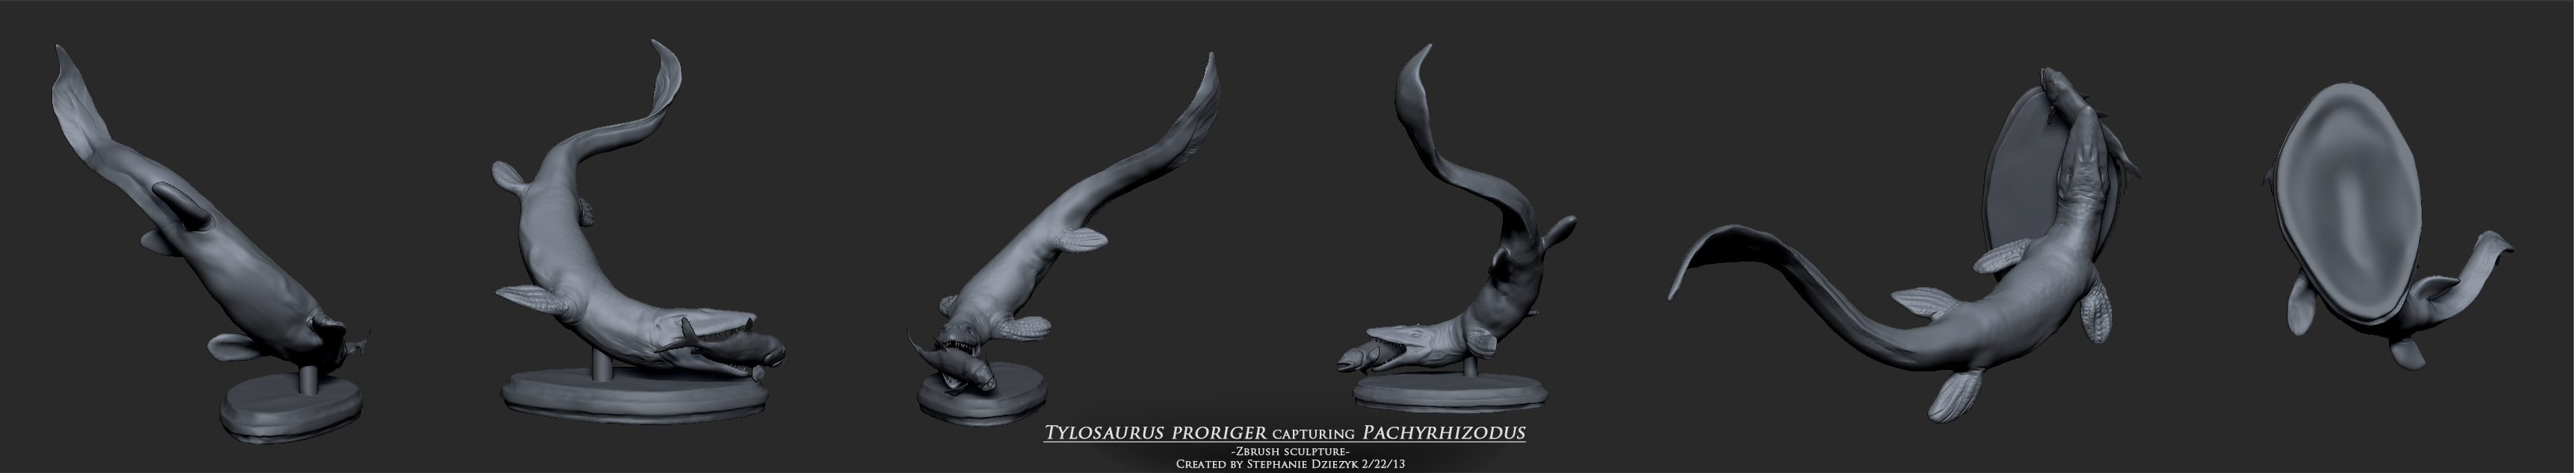 Image of Tylosaurus proriger capturing Pachyrhizodus - Model